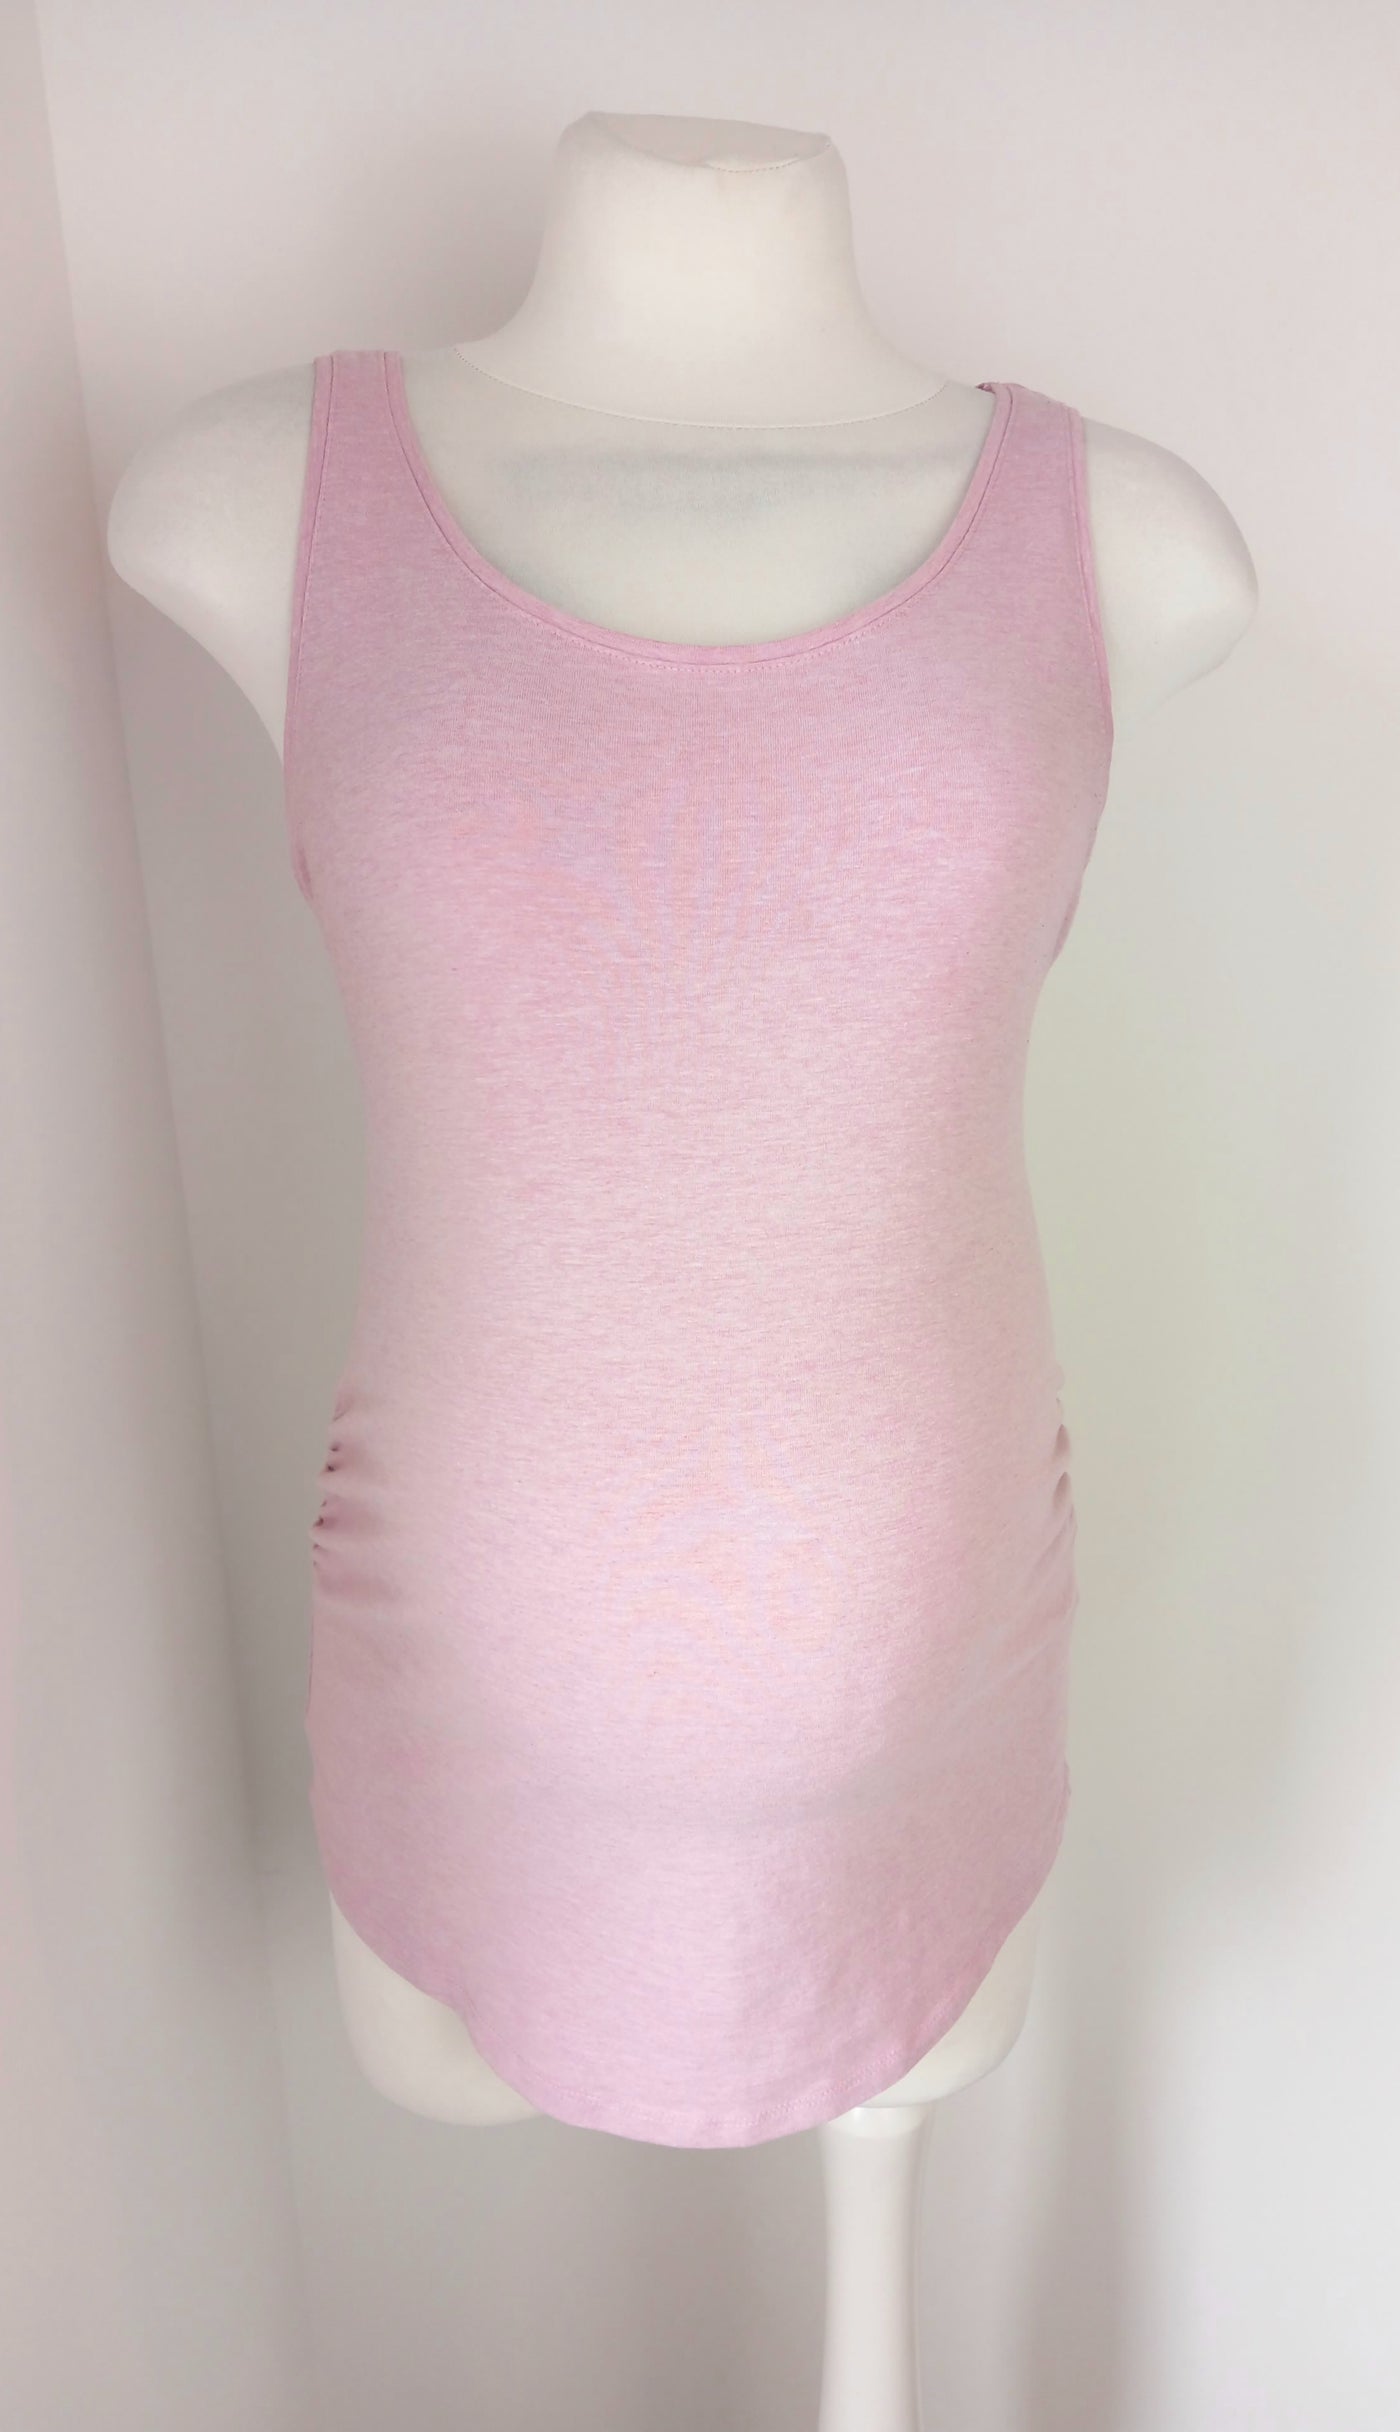 H&M Mama light pink sleeveless top - Size L (Approx UK 12/14)